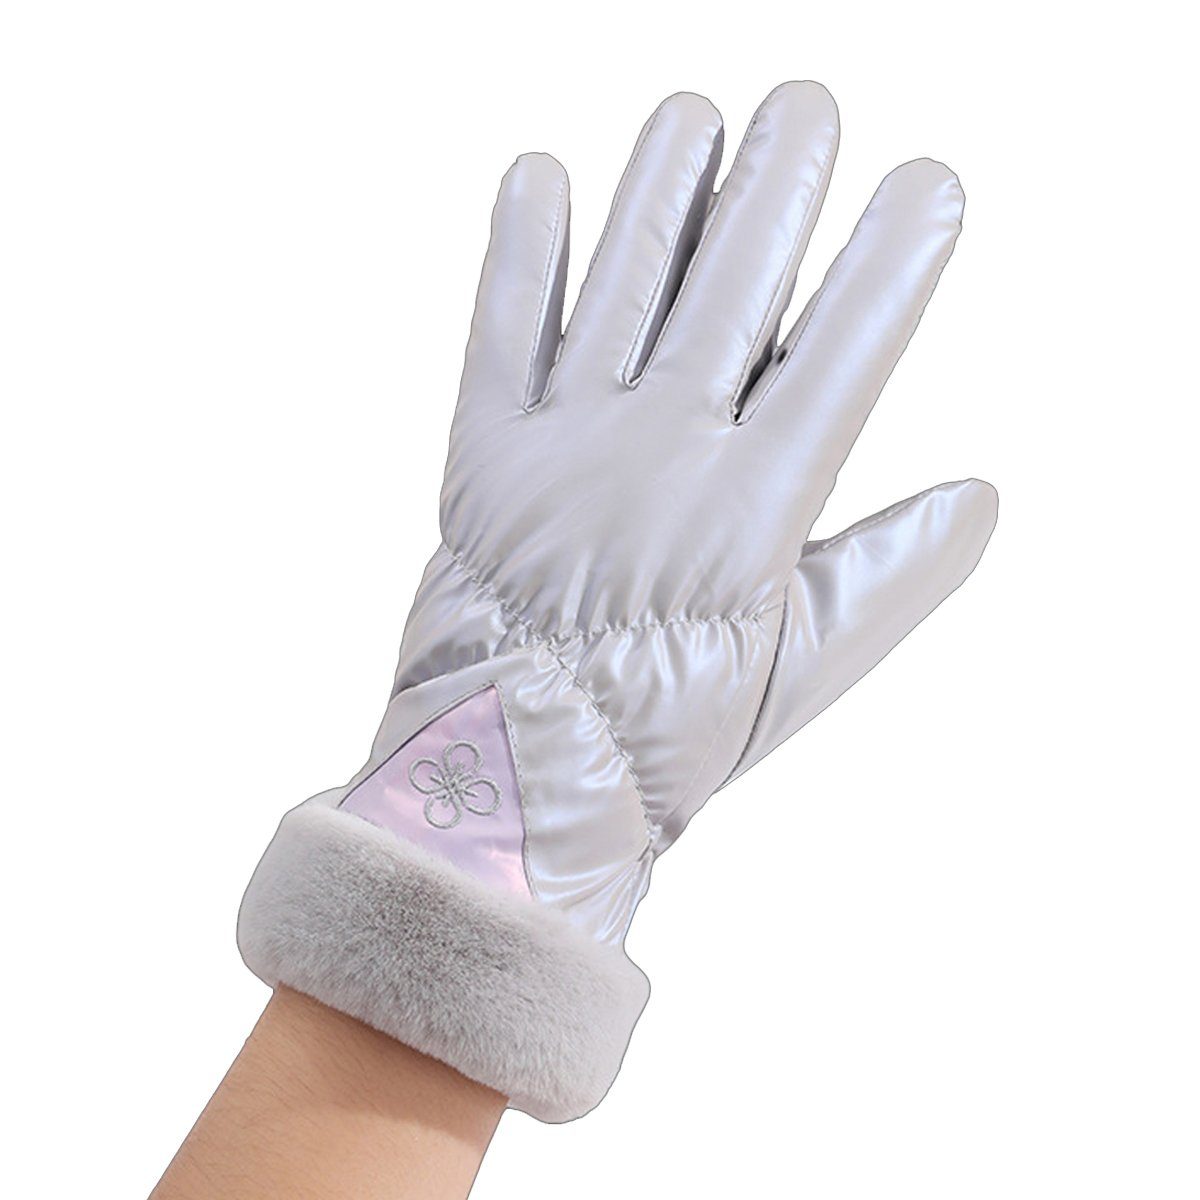 ZmdecQna Fleecehandschuhe Damen Winter Warm Touchscreen Handschuhe Thermo Winterhandschuhe grau